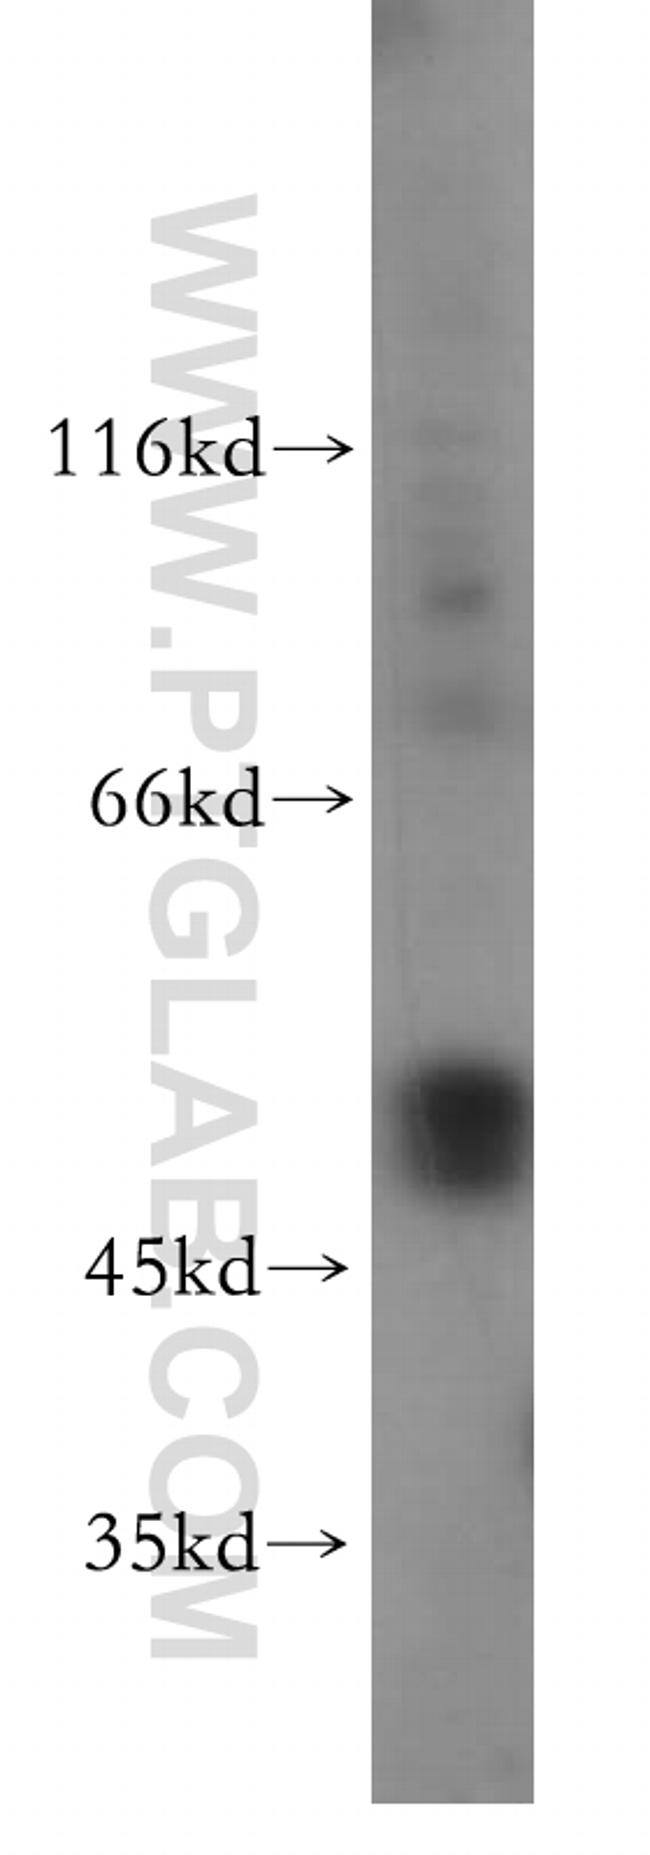 TRMT5 Antibody in Western Blot (WB)